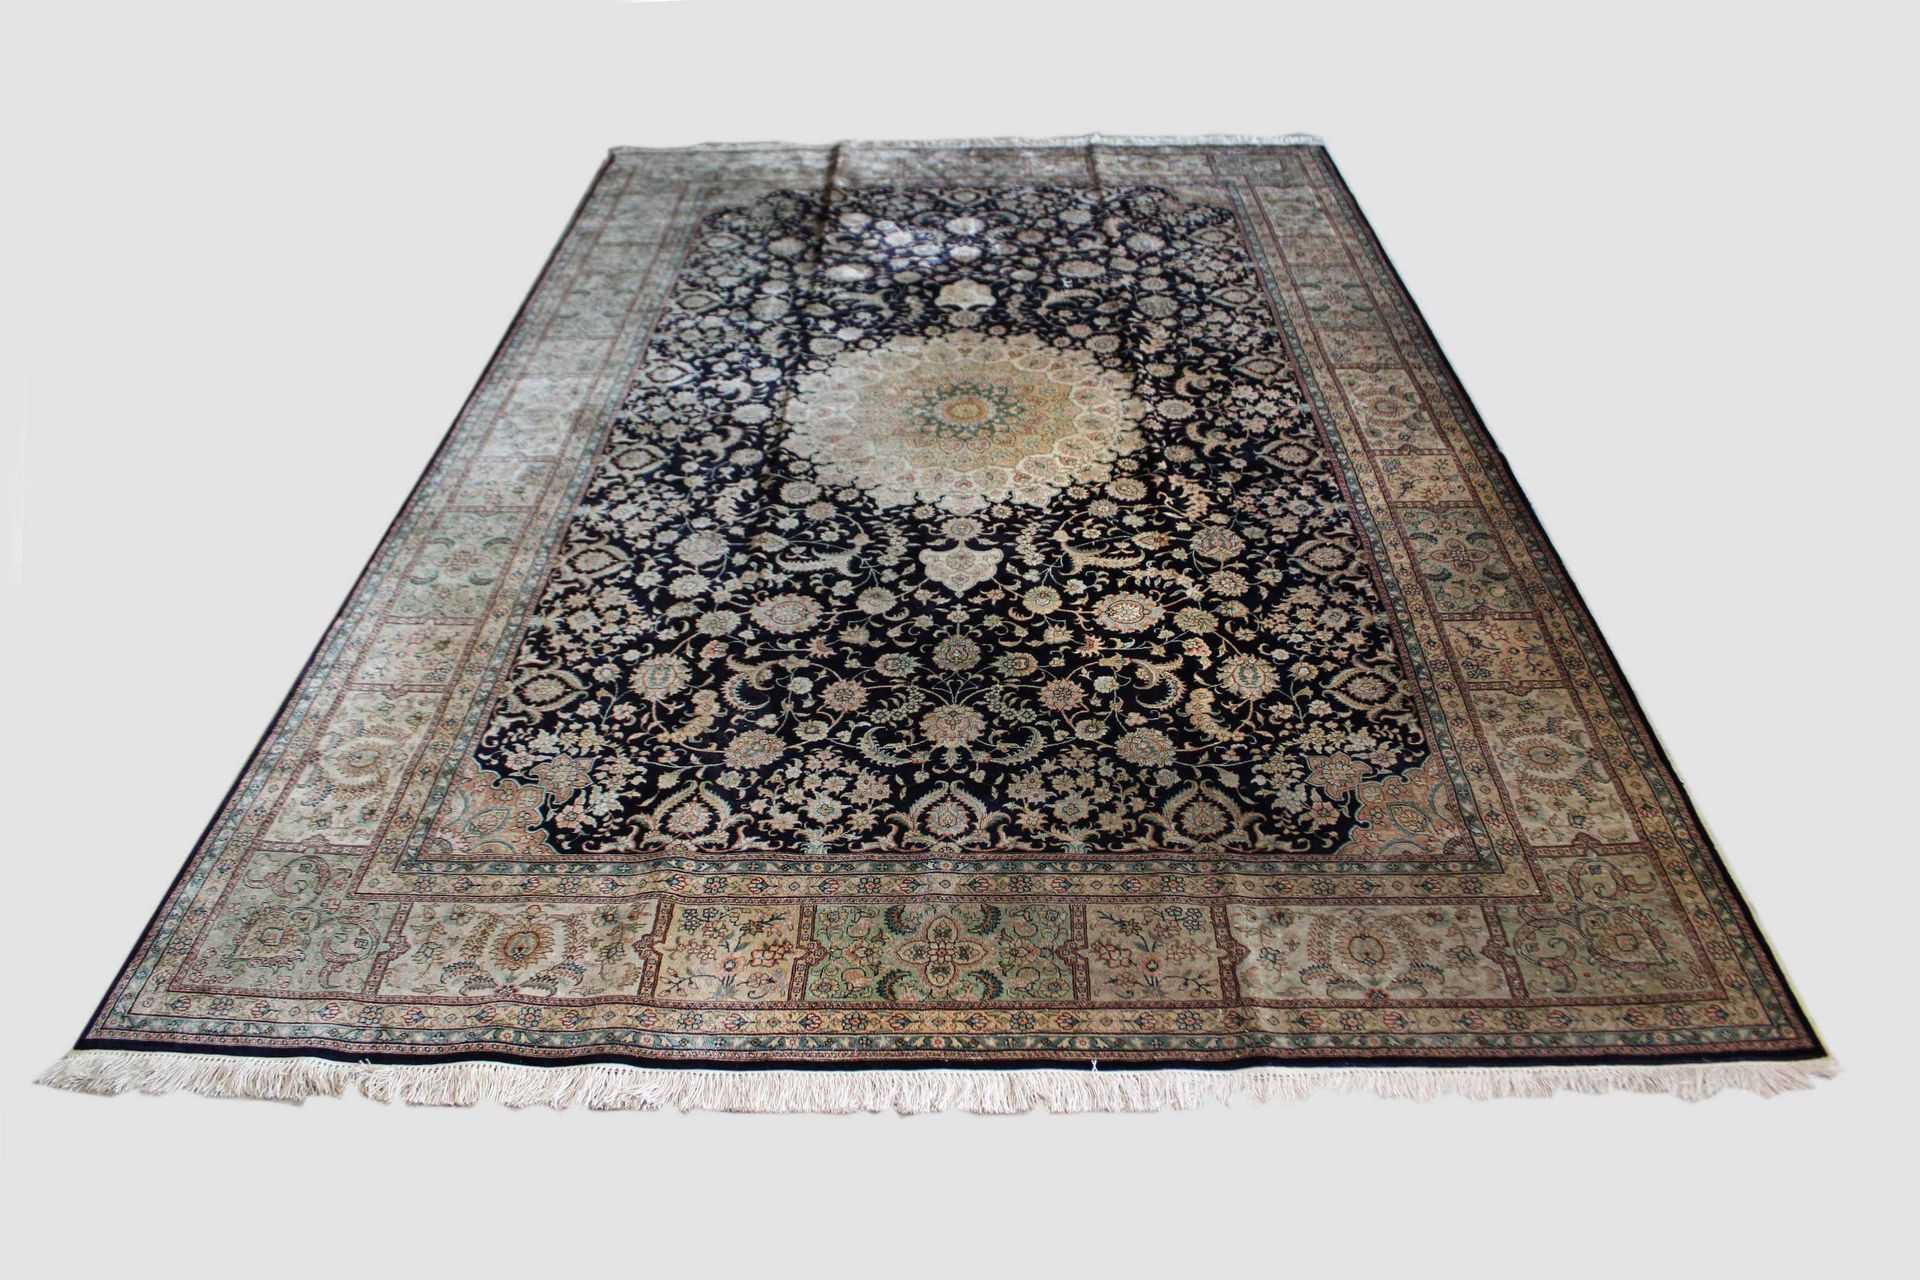 Teppich, China Teppich, China, Seide. Maße: 185 x 283 cm.